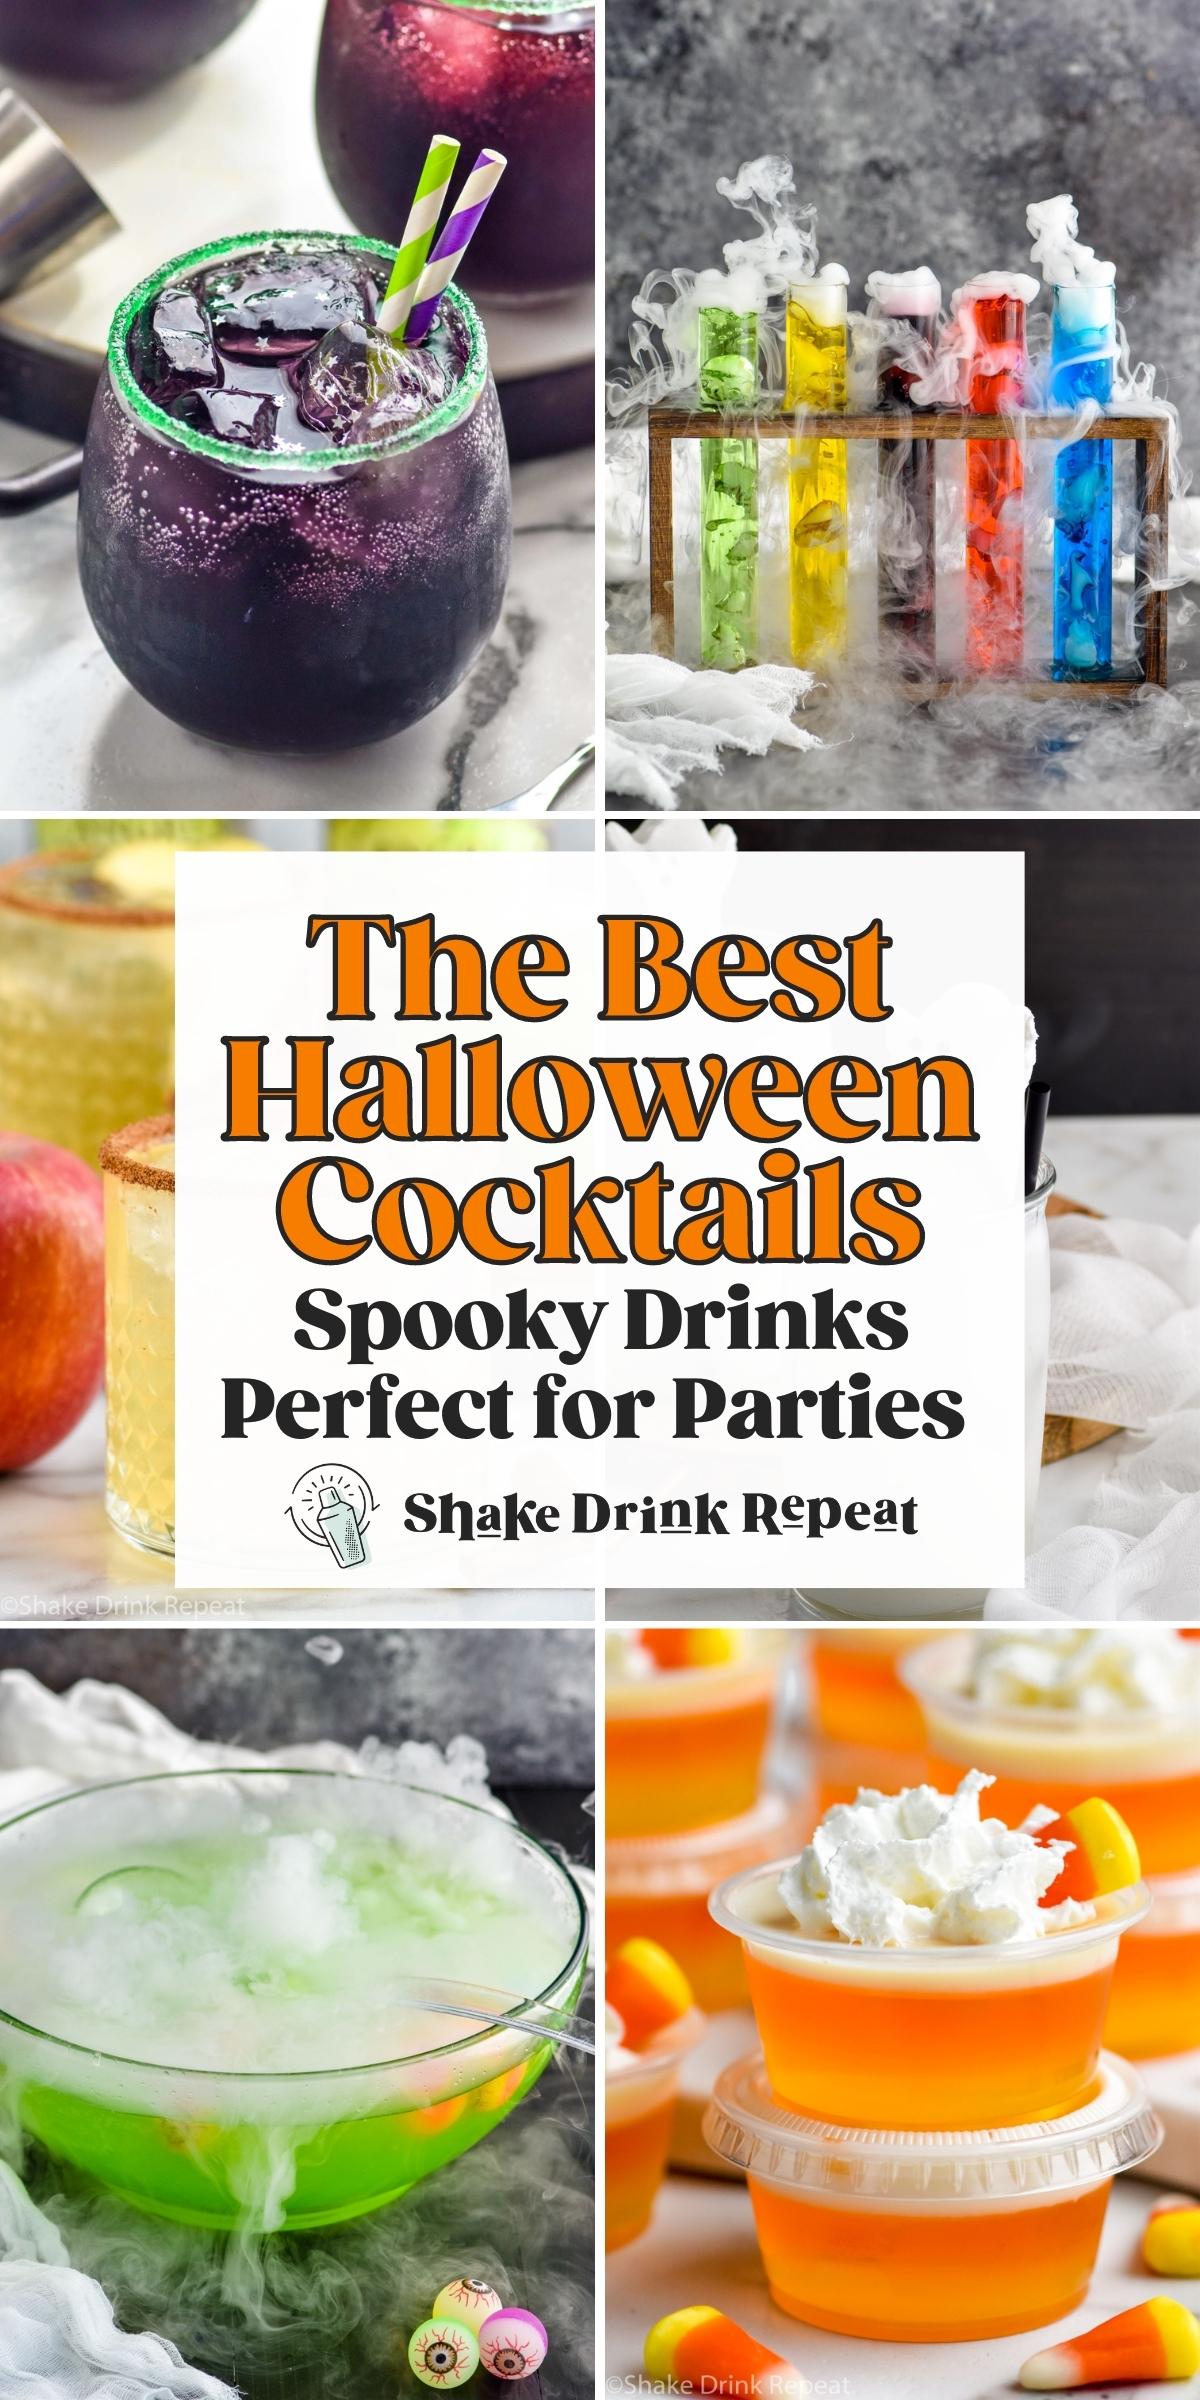 Halloween Cocktails - Shake Drink Repeat